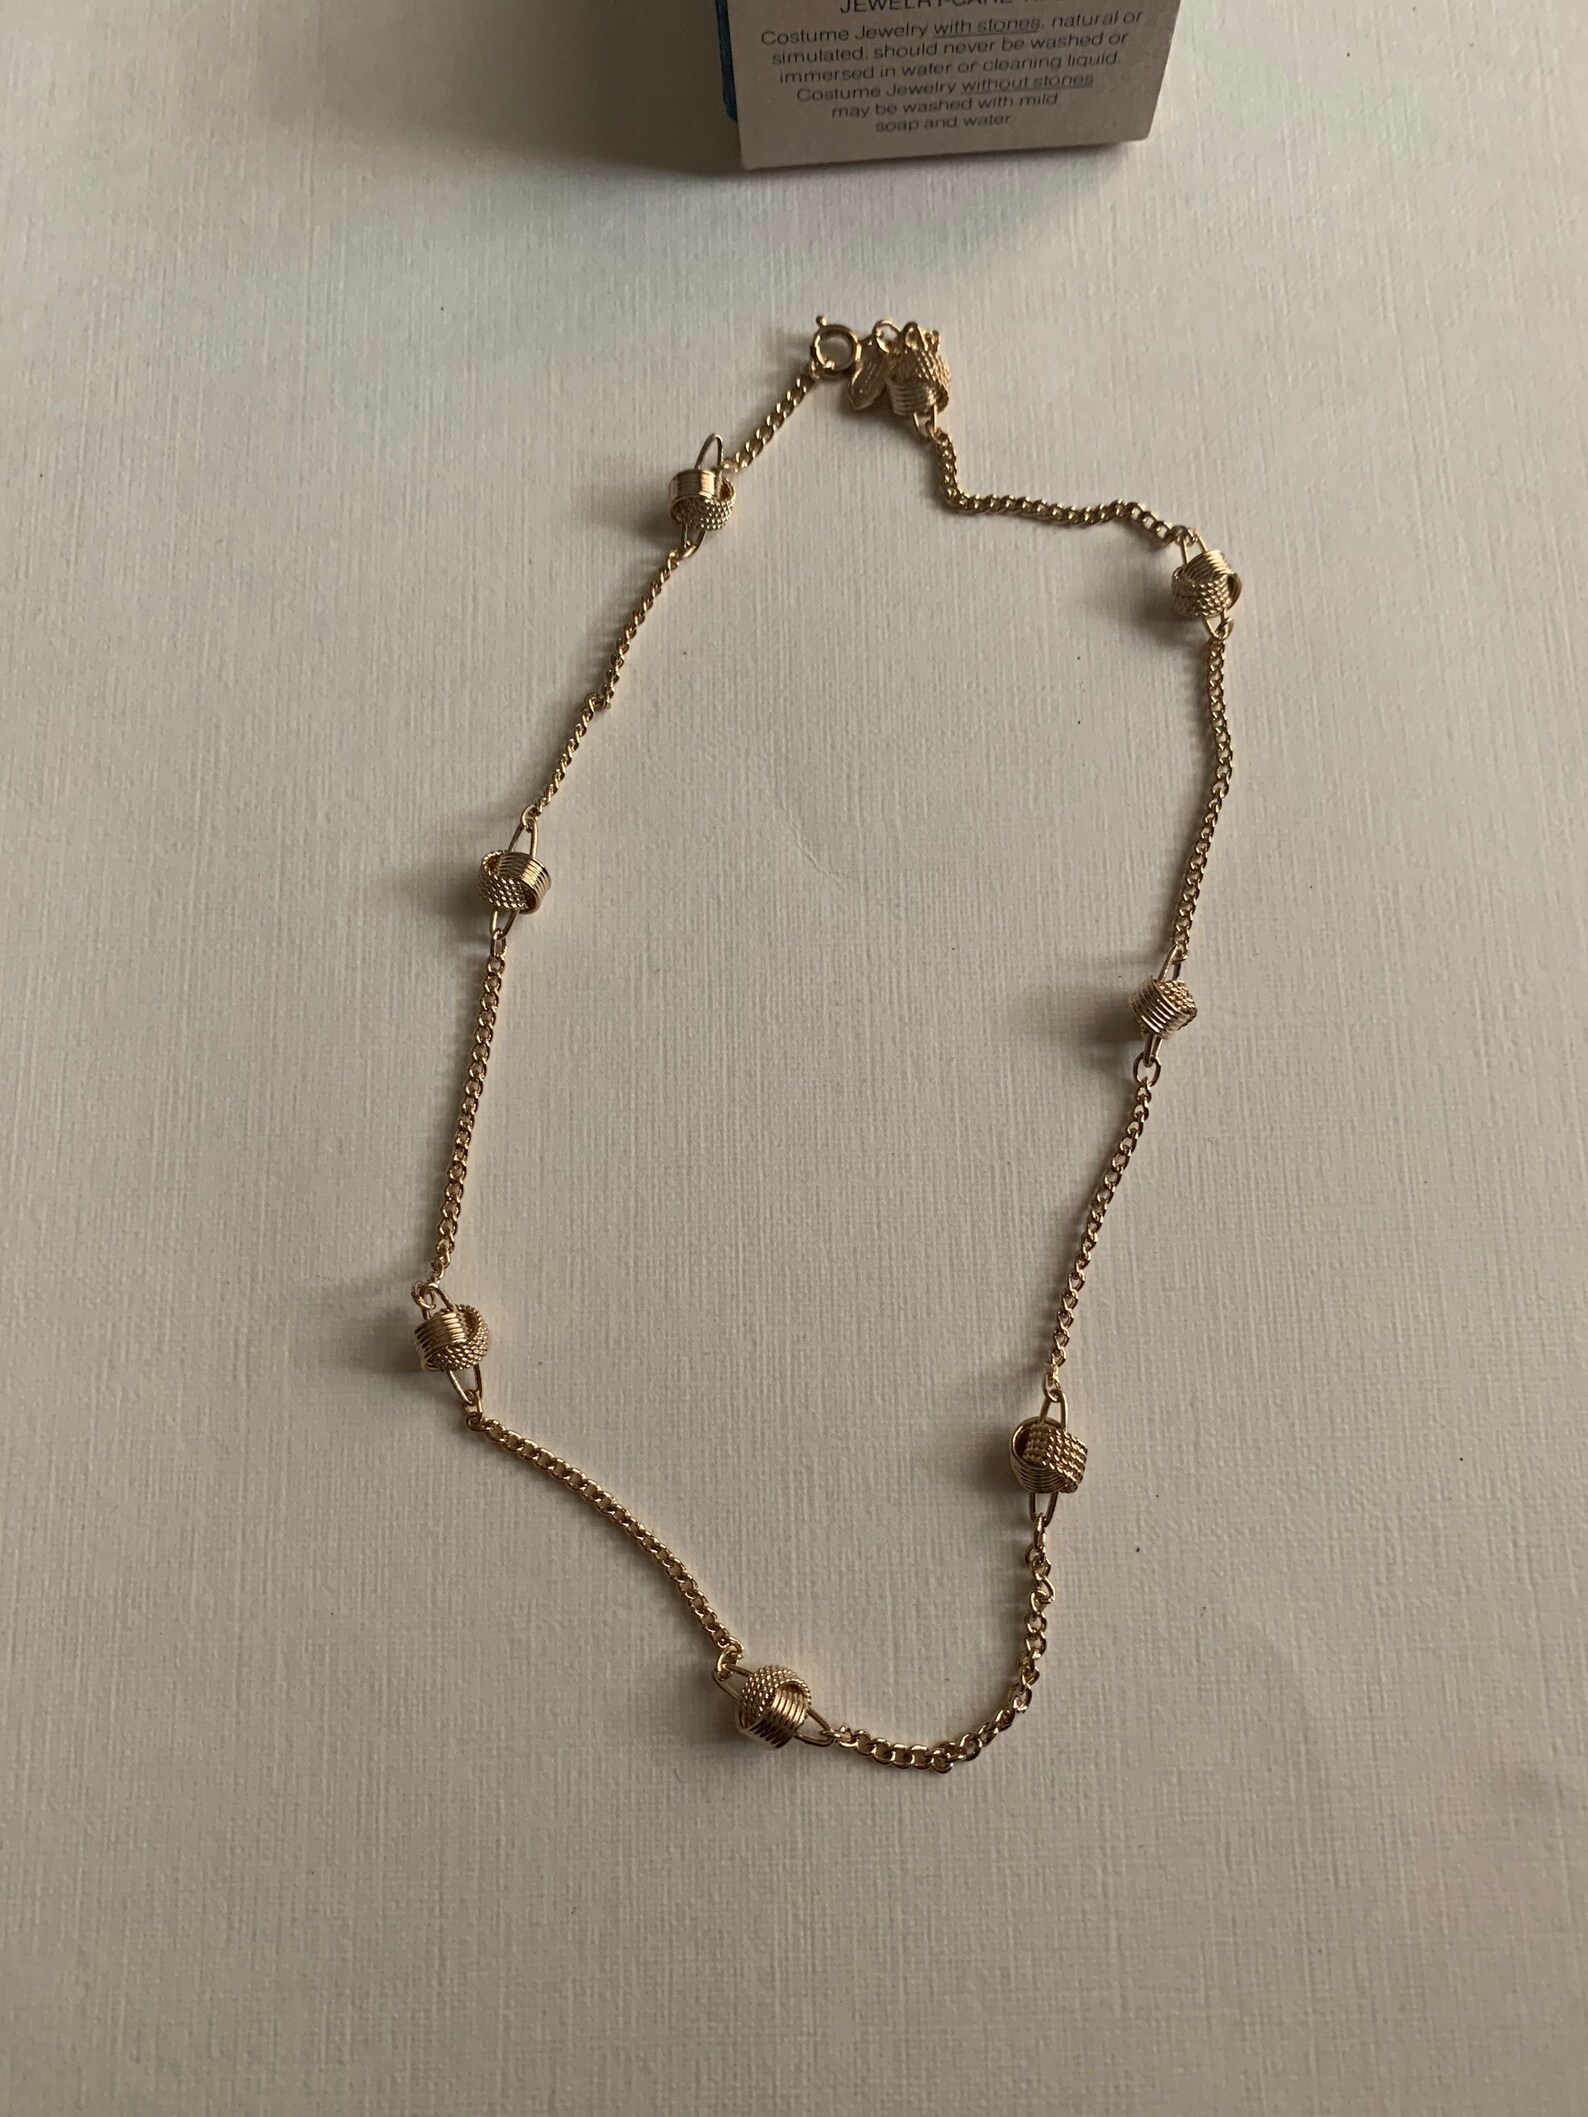 Vintage Avon gold tone delicate knot necklace | Etsy